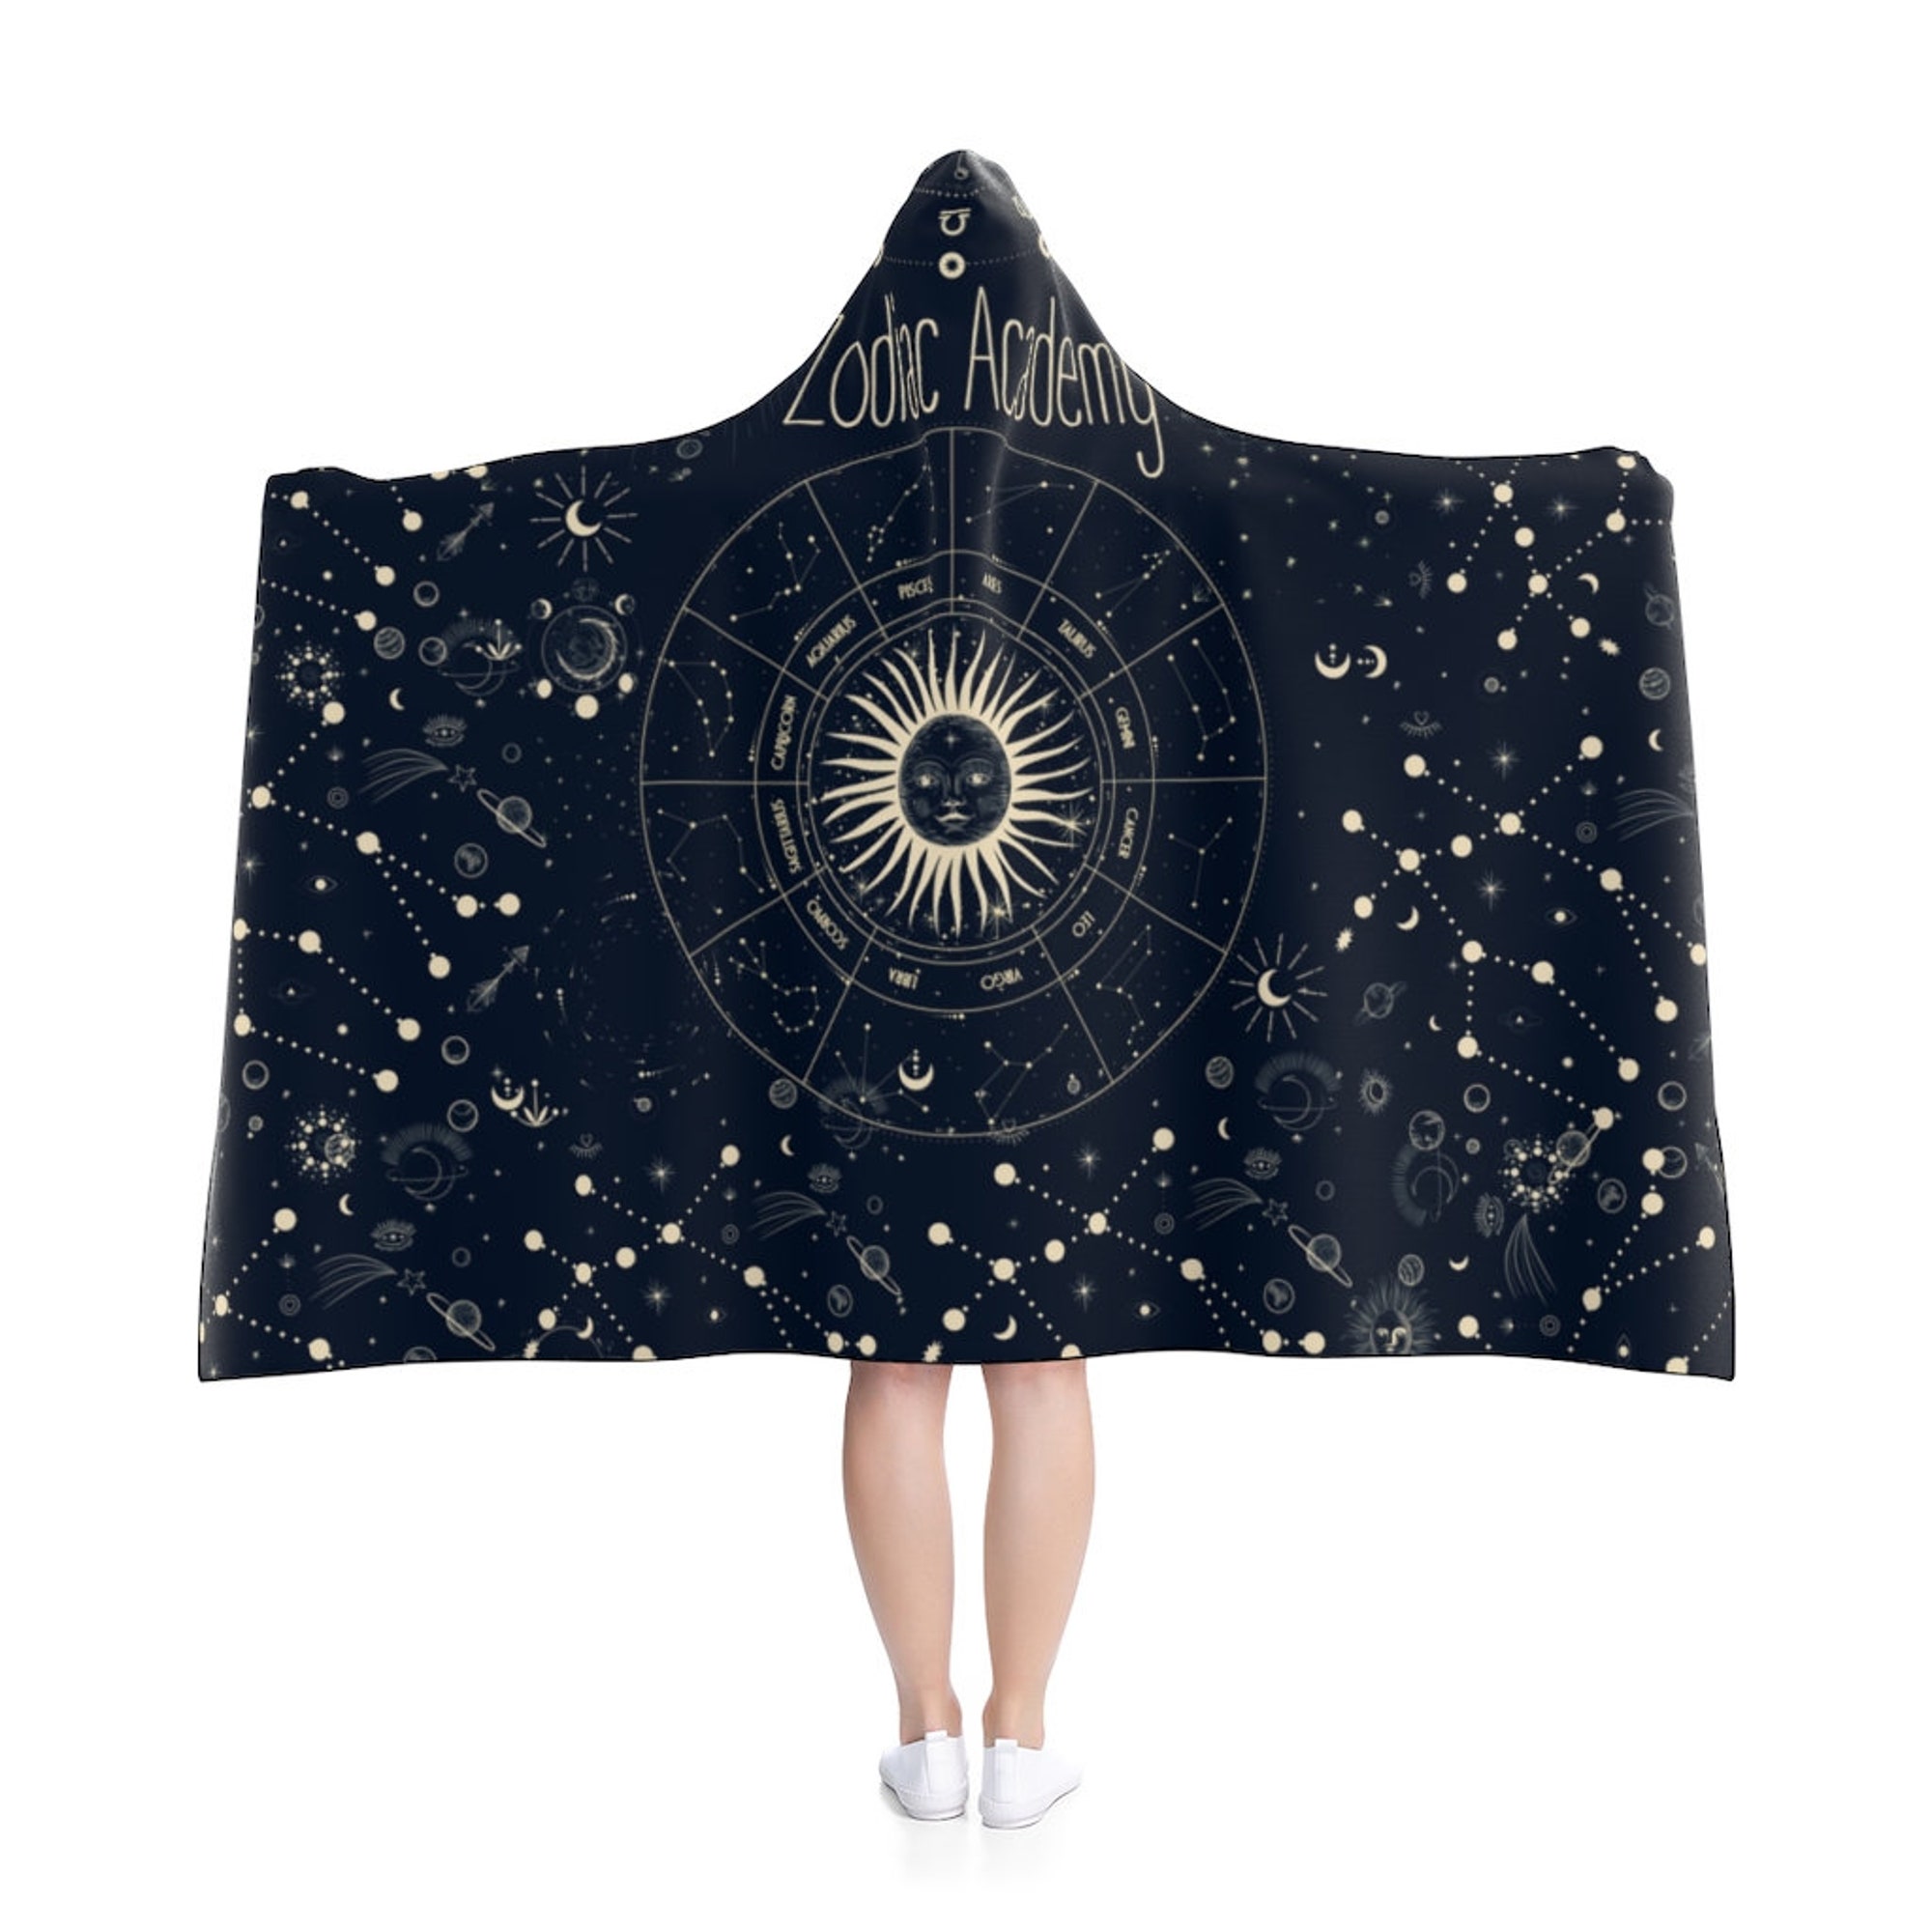 Discover Zodiac Inspired Hooded Blanket